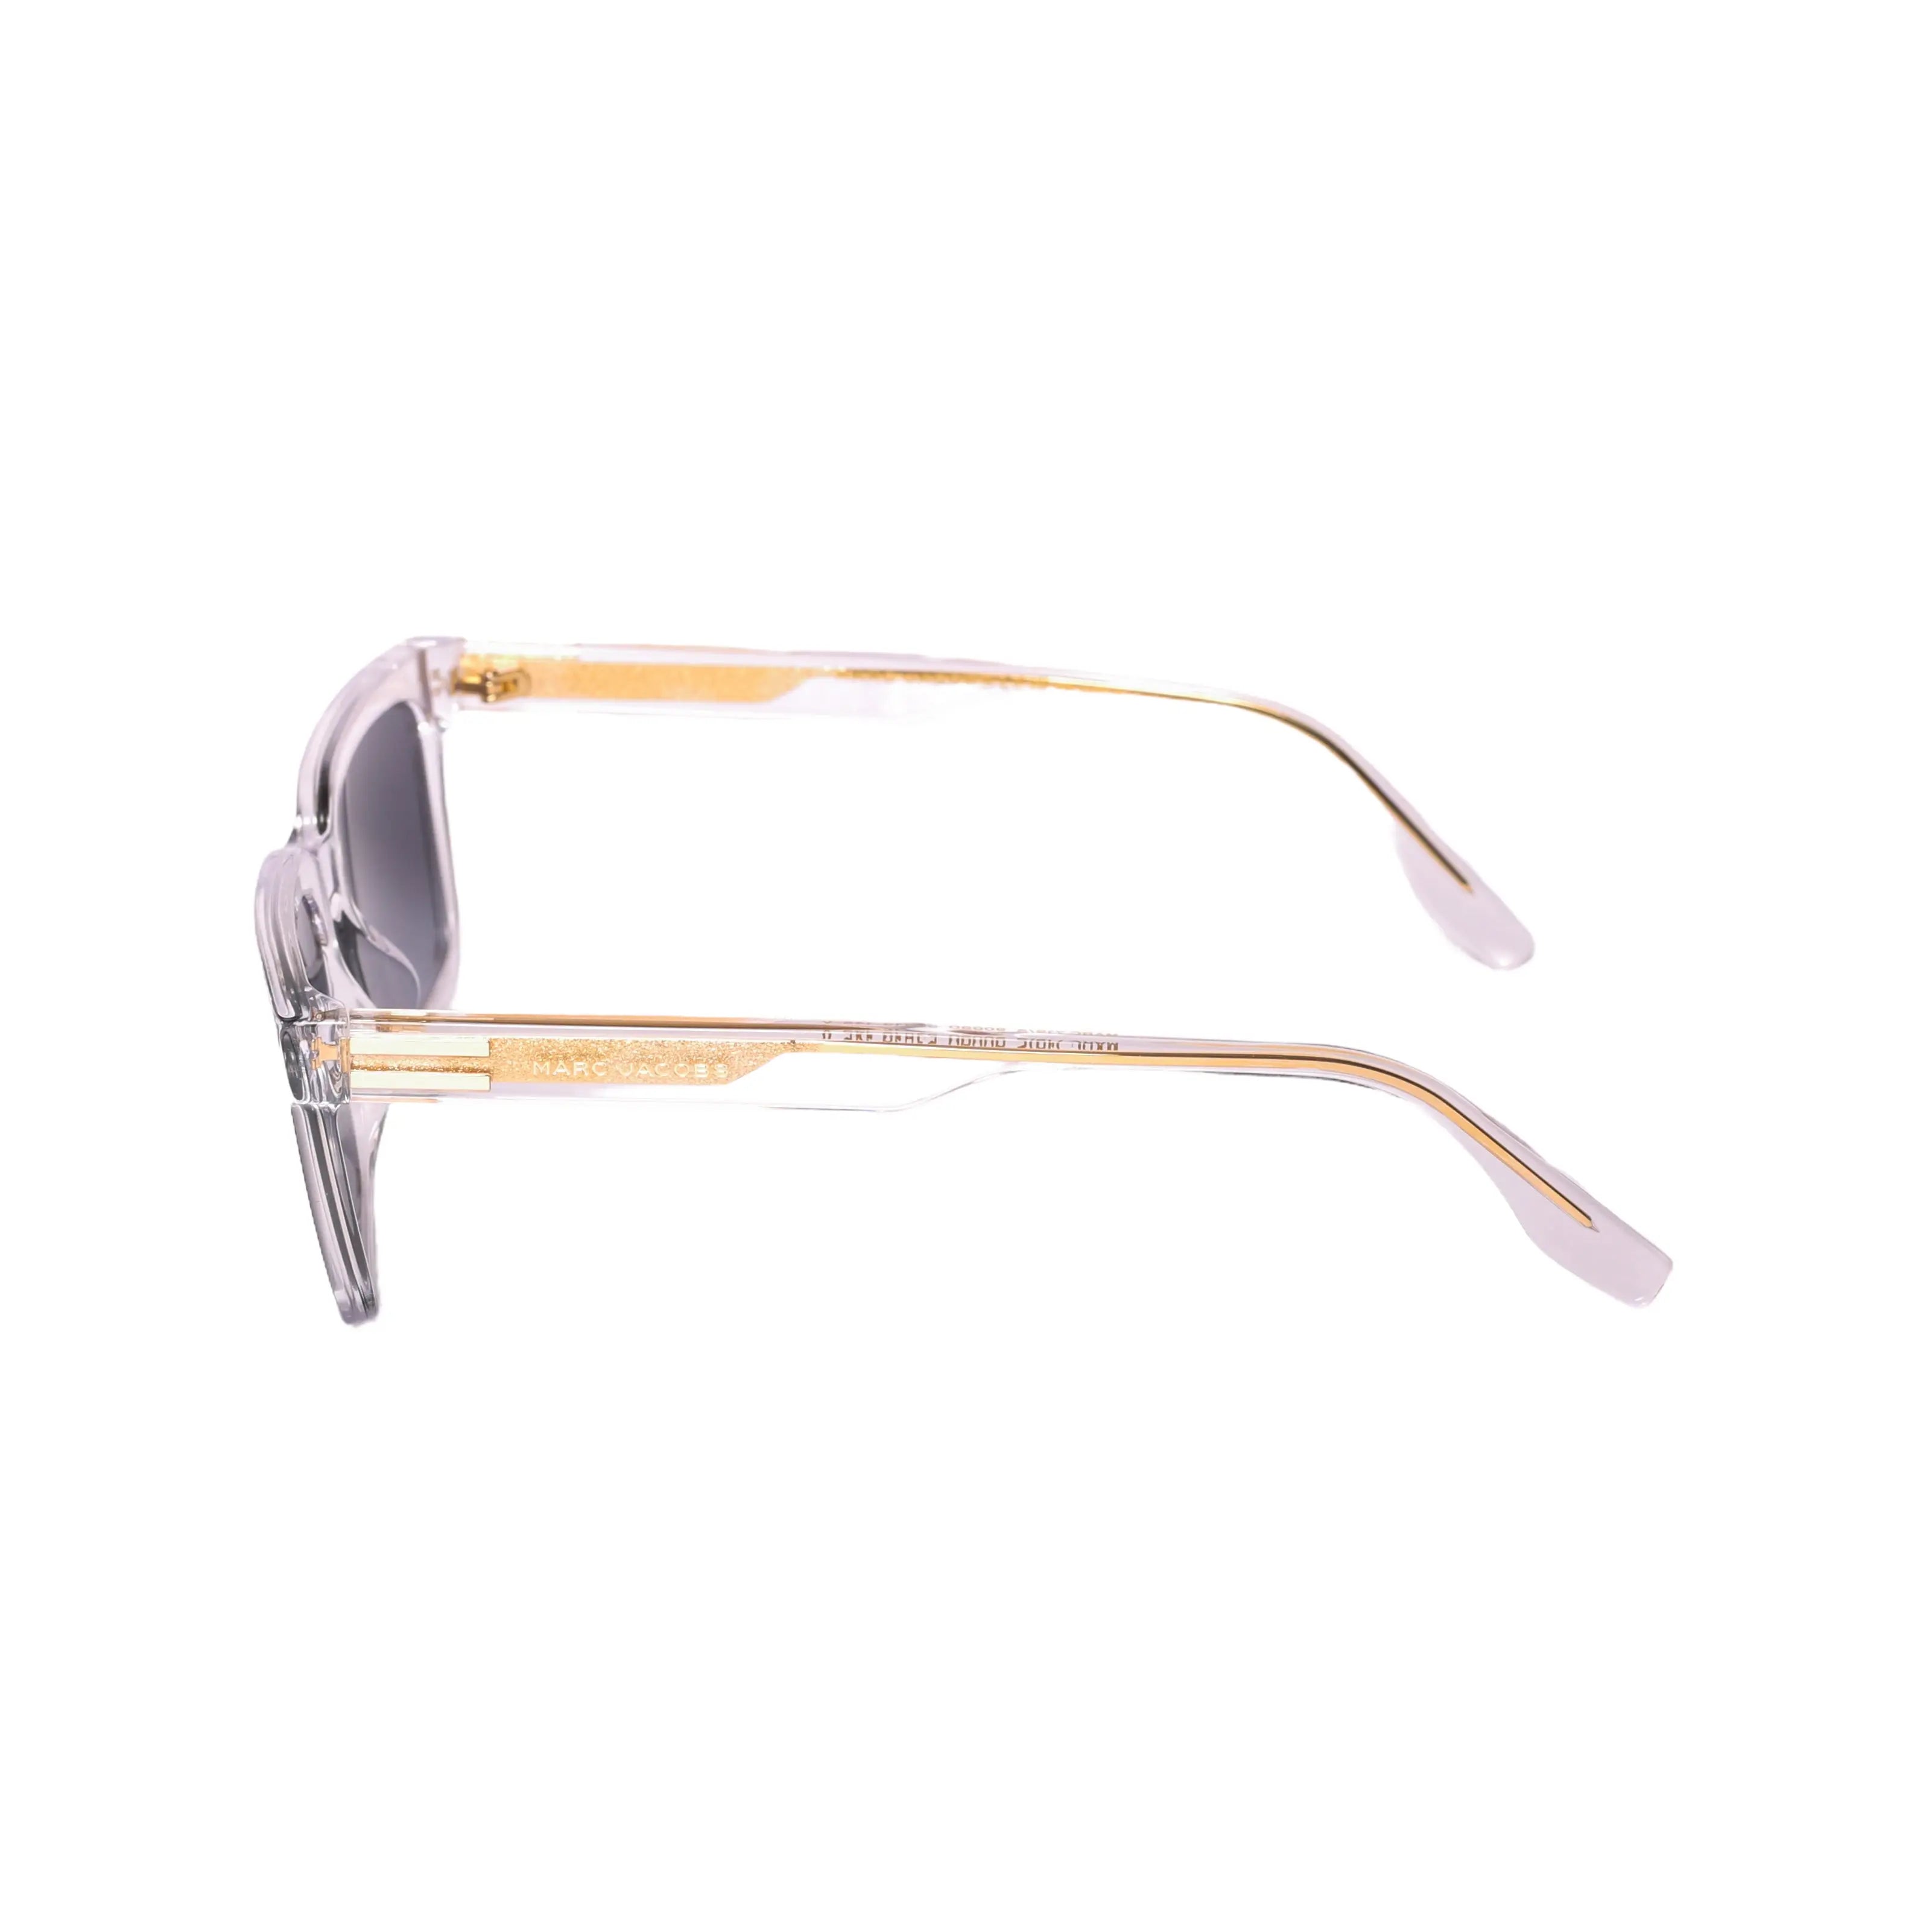 Marc Jacob-MARC 719/S-53-900-9 Sunglasses - Premium Sunglasses from Marc Jacob - Just Rs. 14400! Shop now at Laxmi Opticians